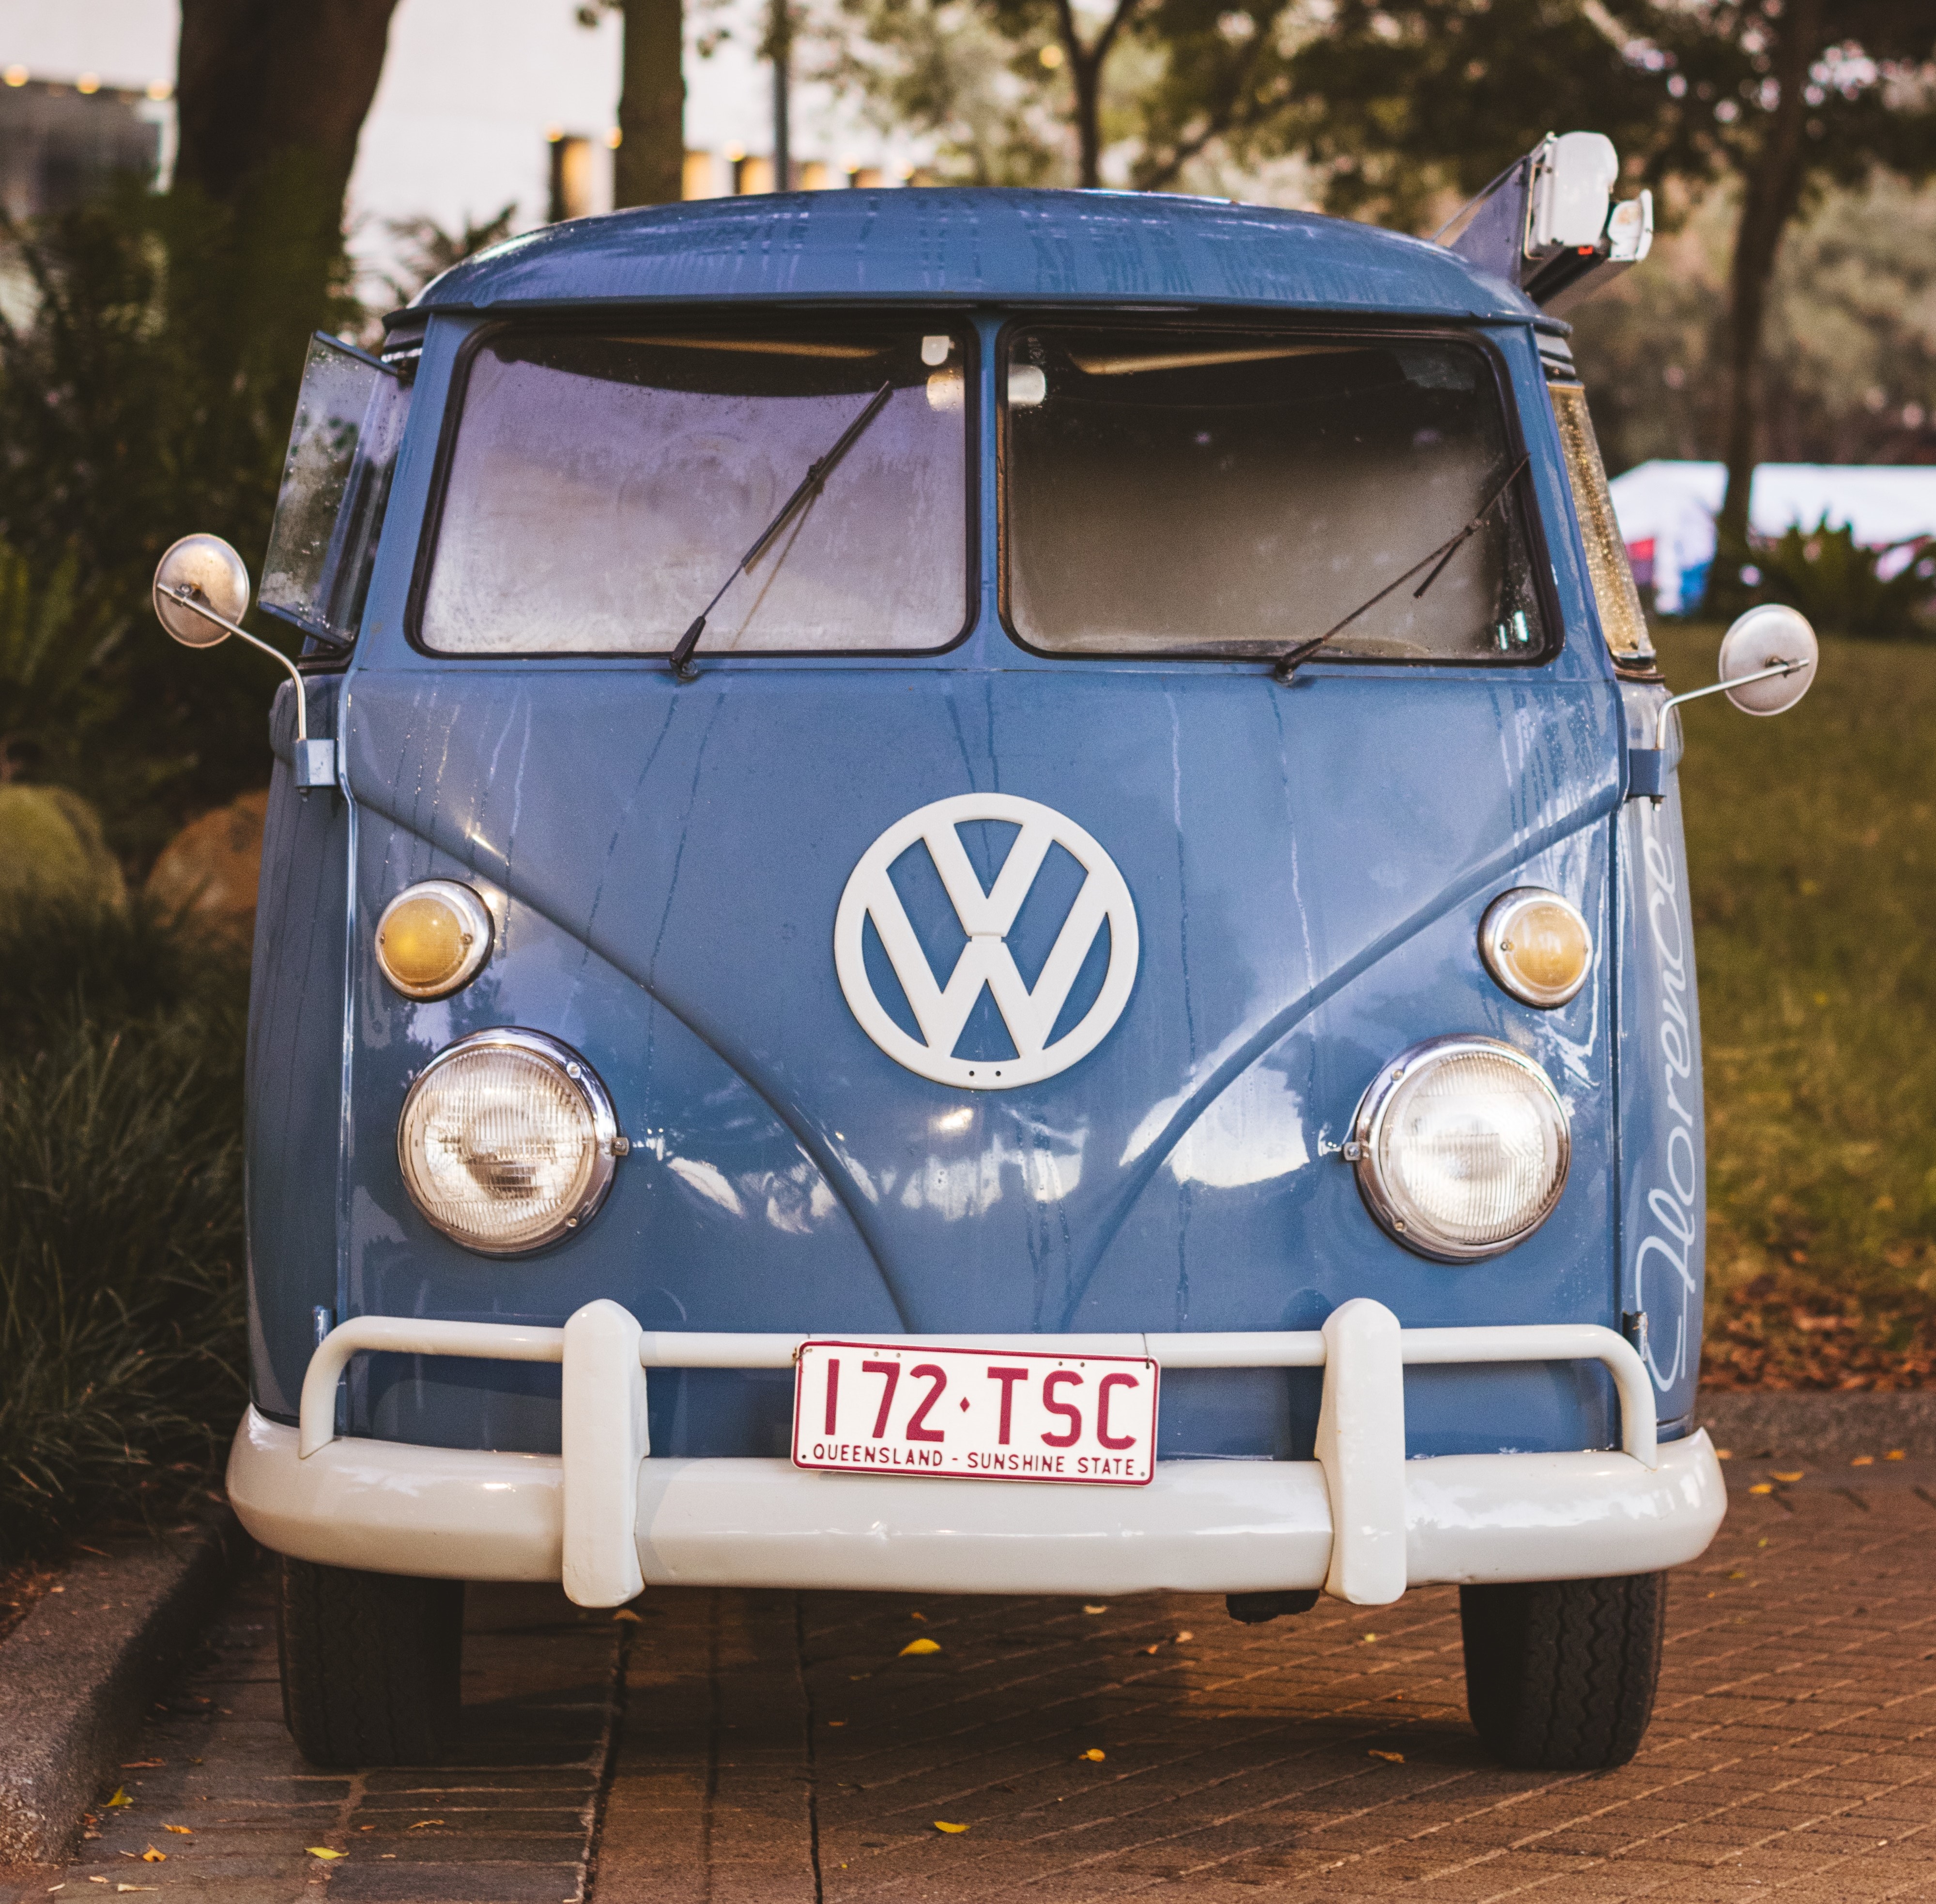 Photo of a VW bus by Oskars Sylwan on Unsplash.